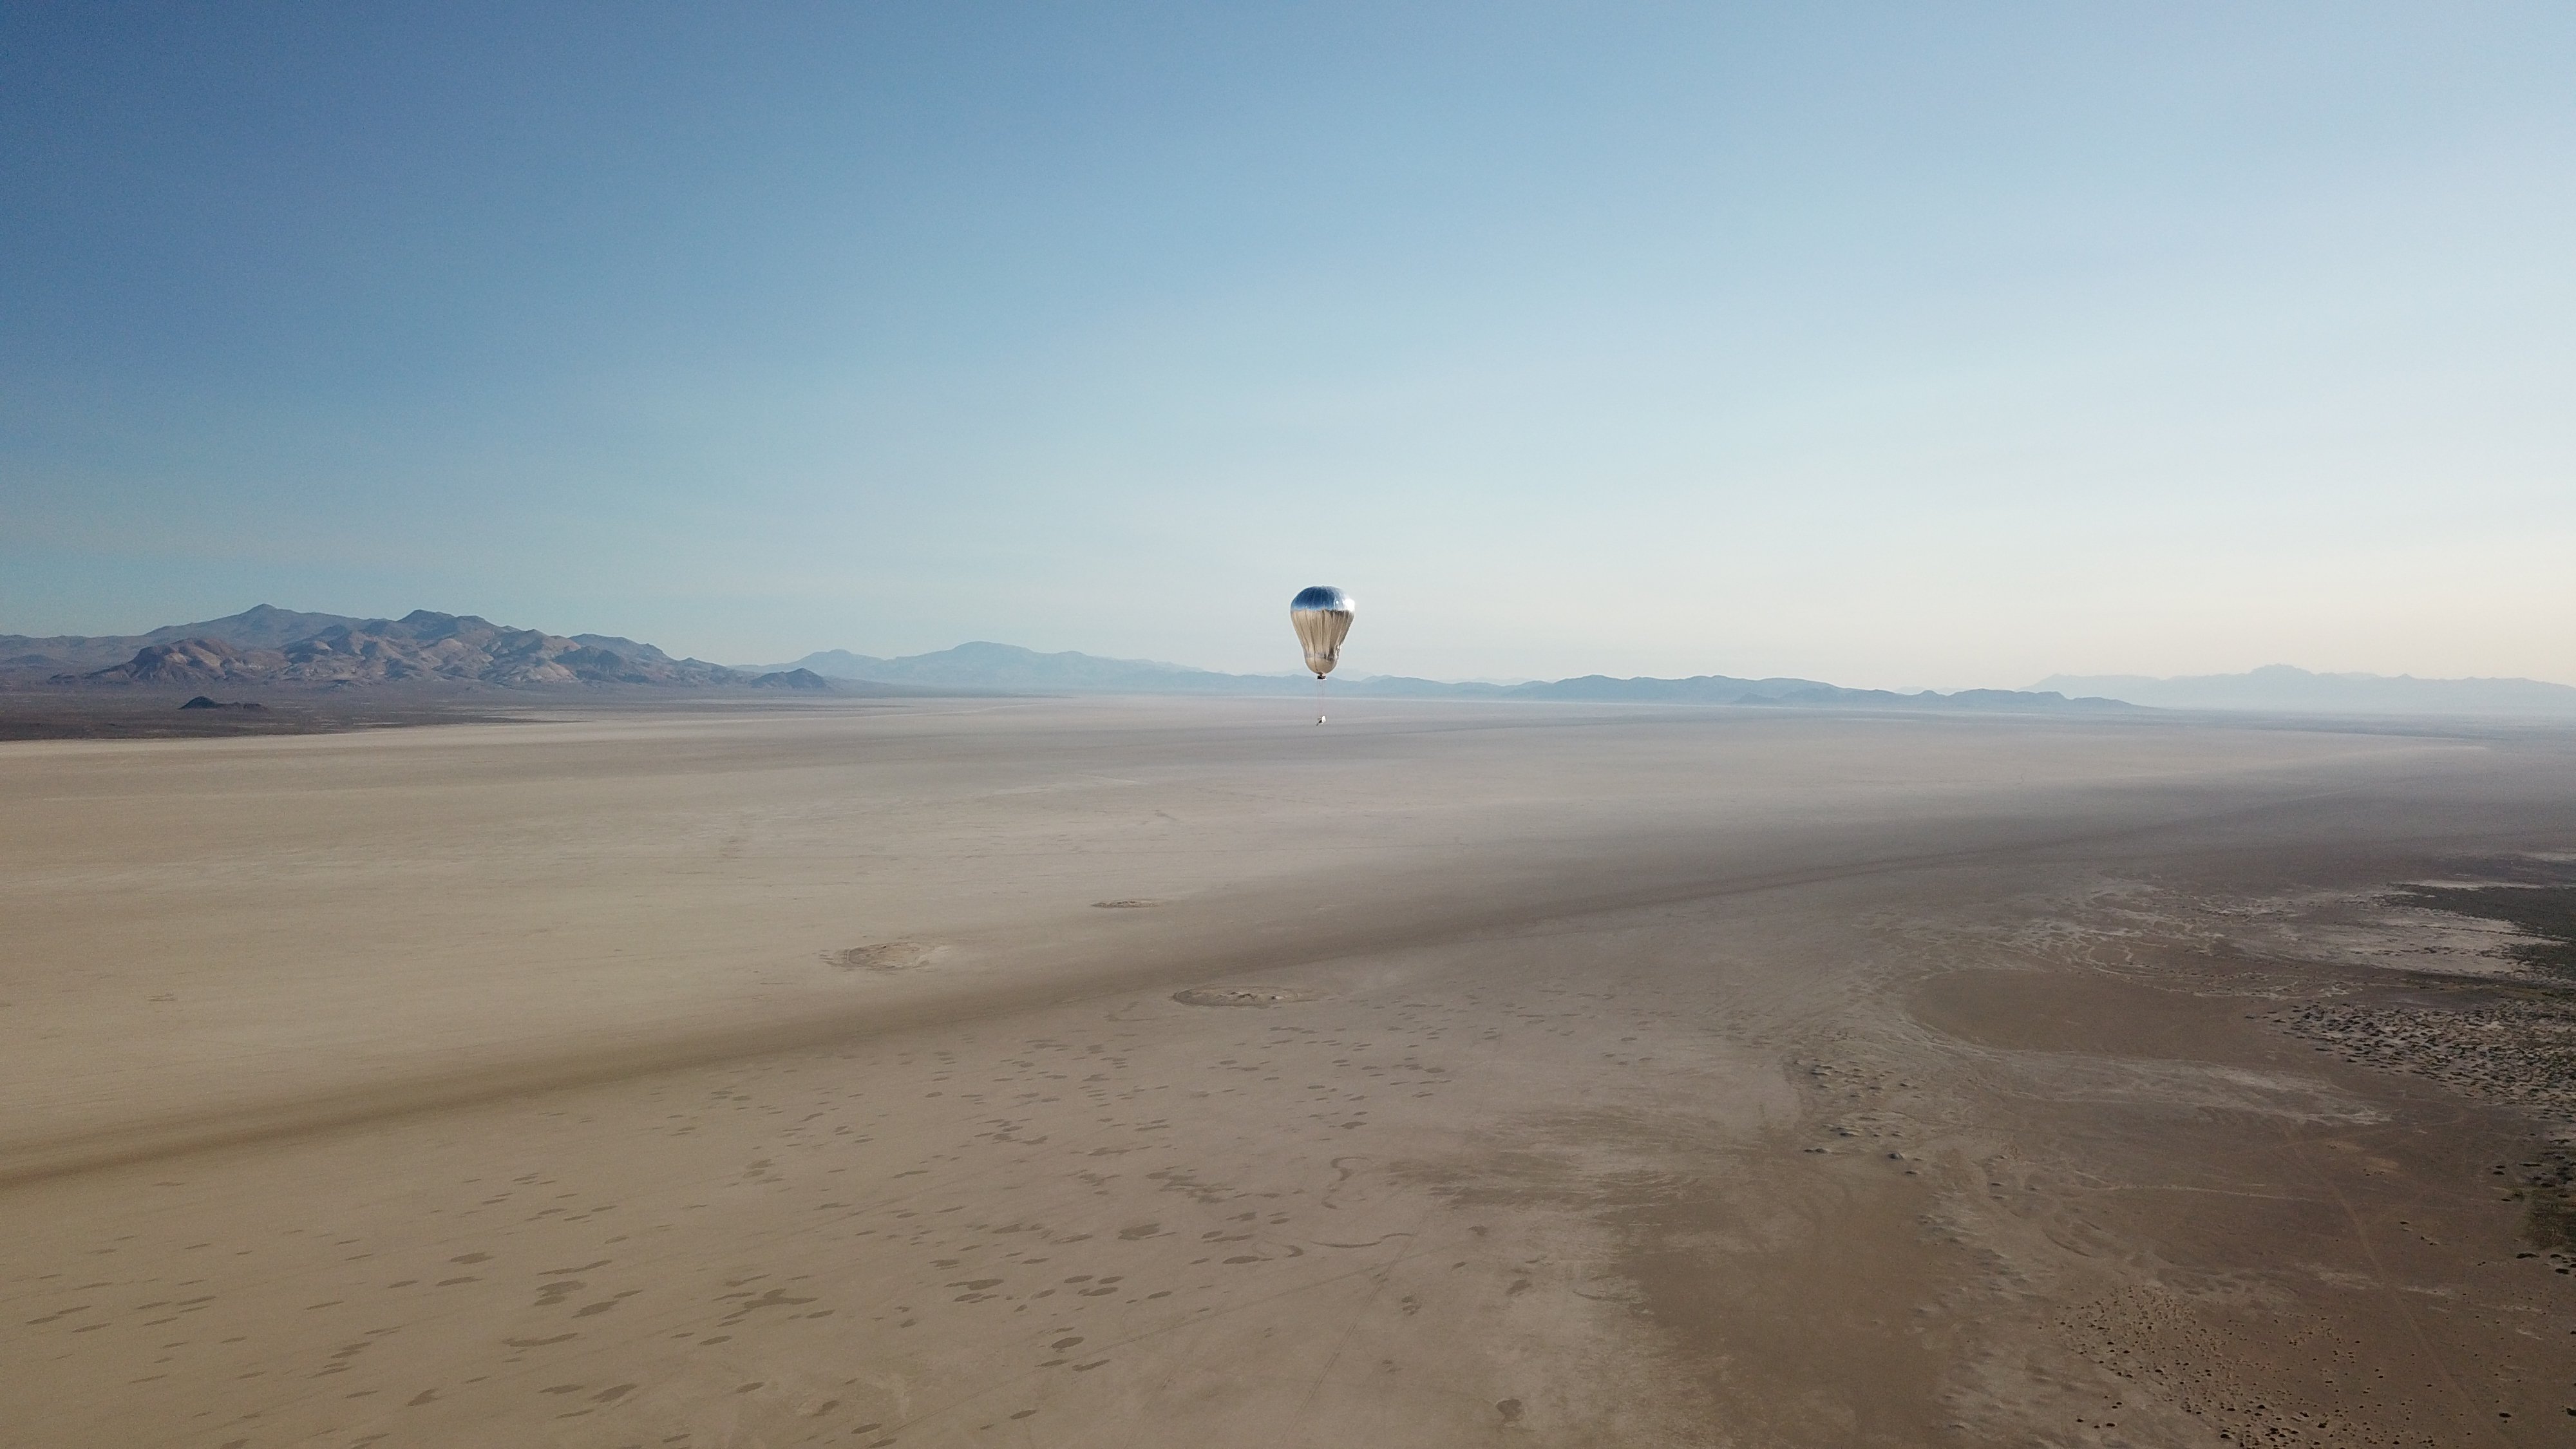 Picture: Prototype Venus aerobot in flight above the Blackrock desert, Nevada.